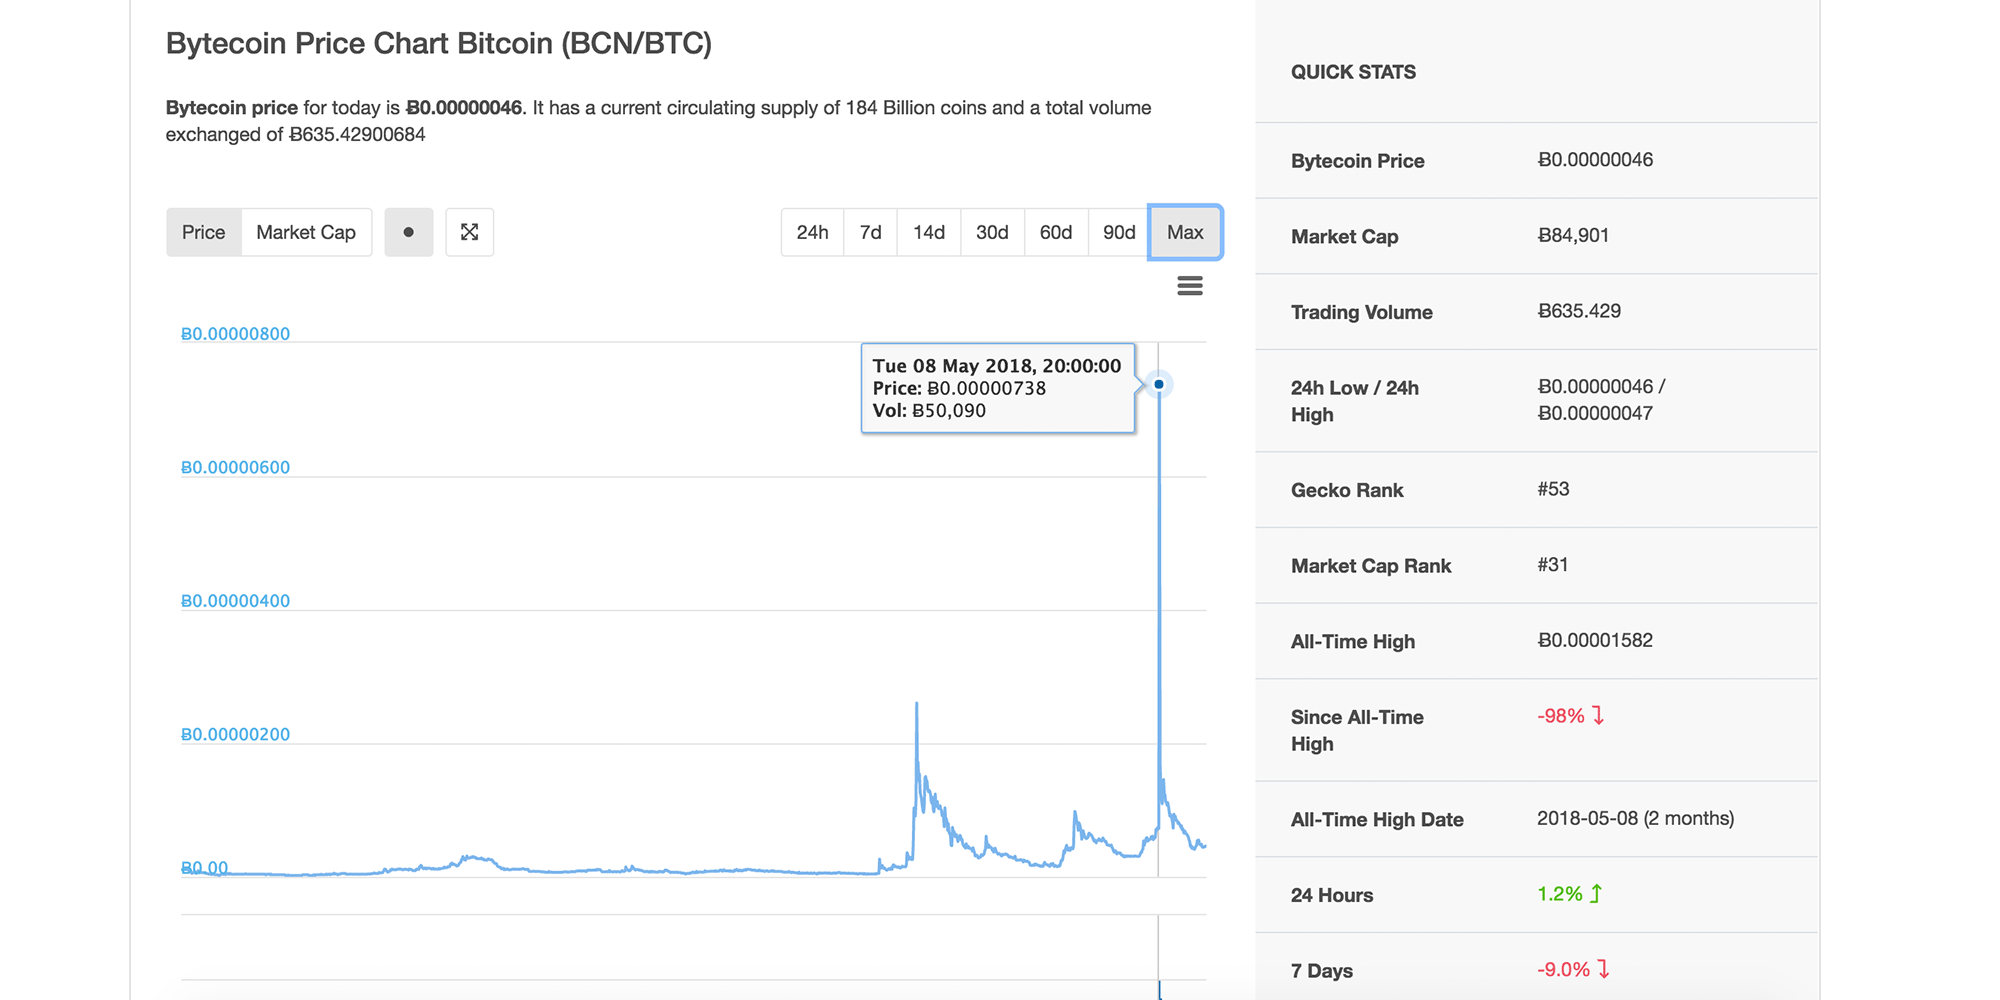 Bytecoin price after news of Binance